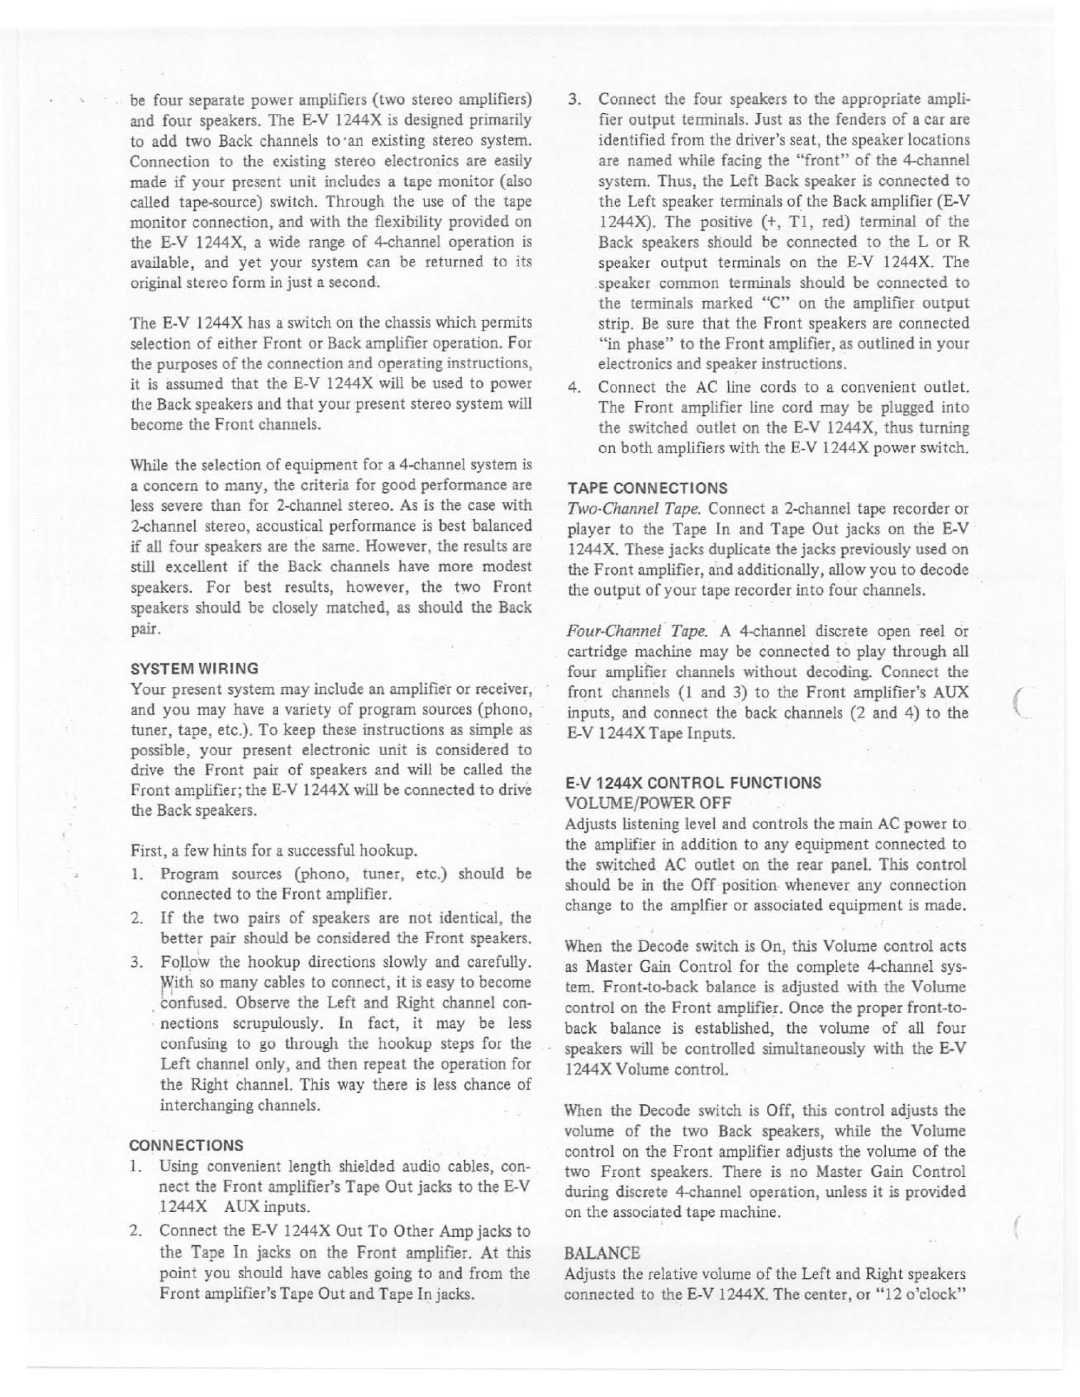 Electro-Voice 1244X manual 